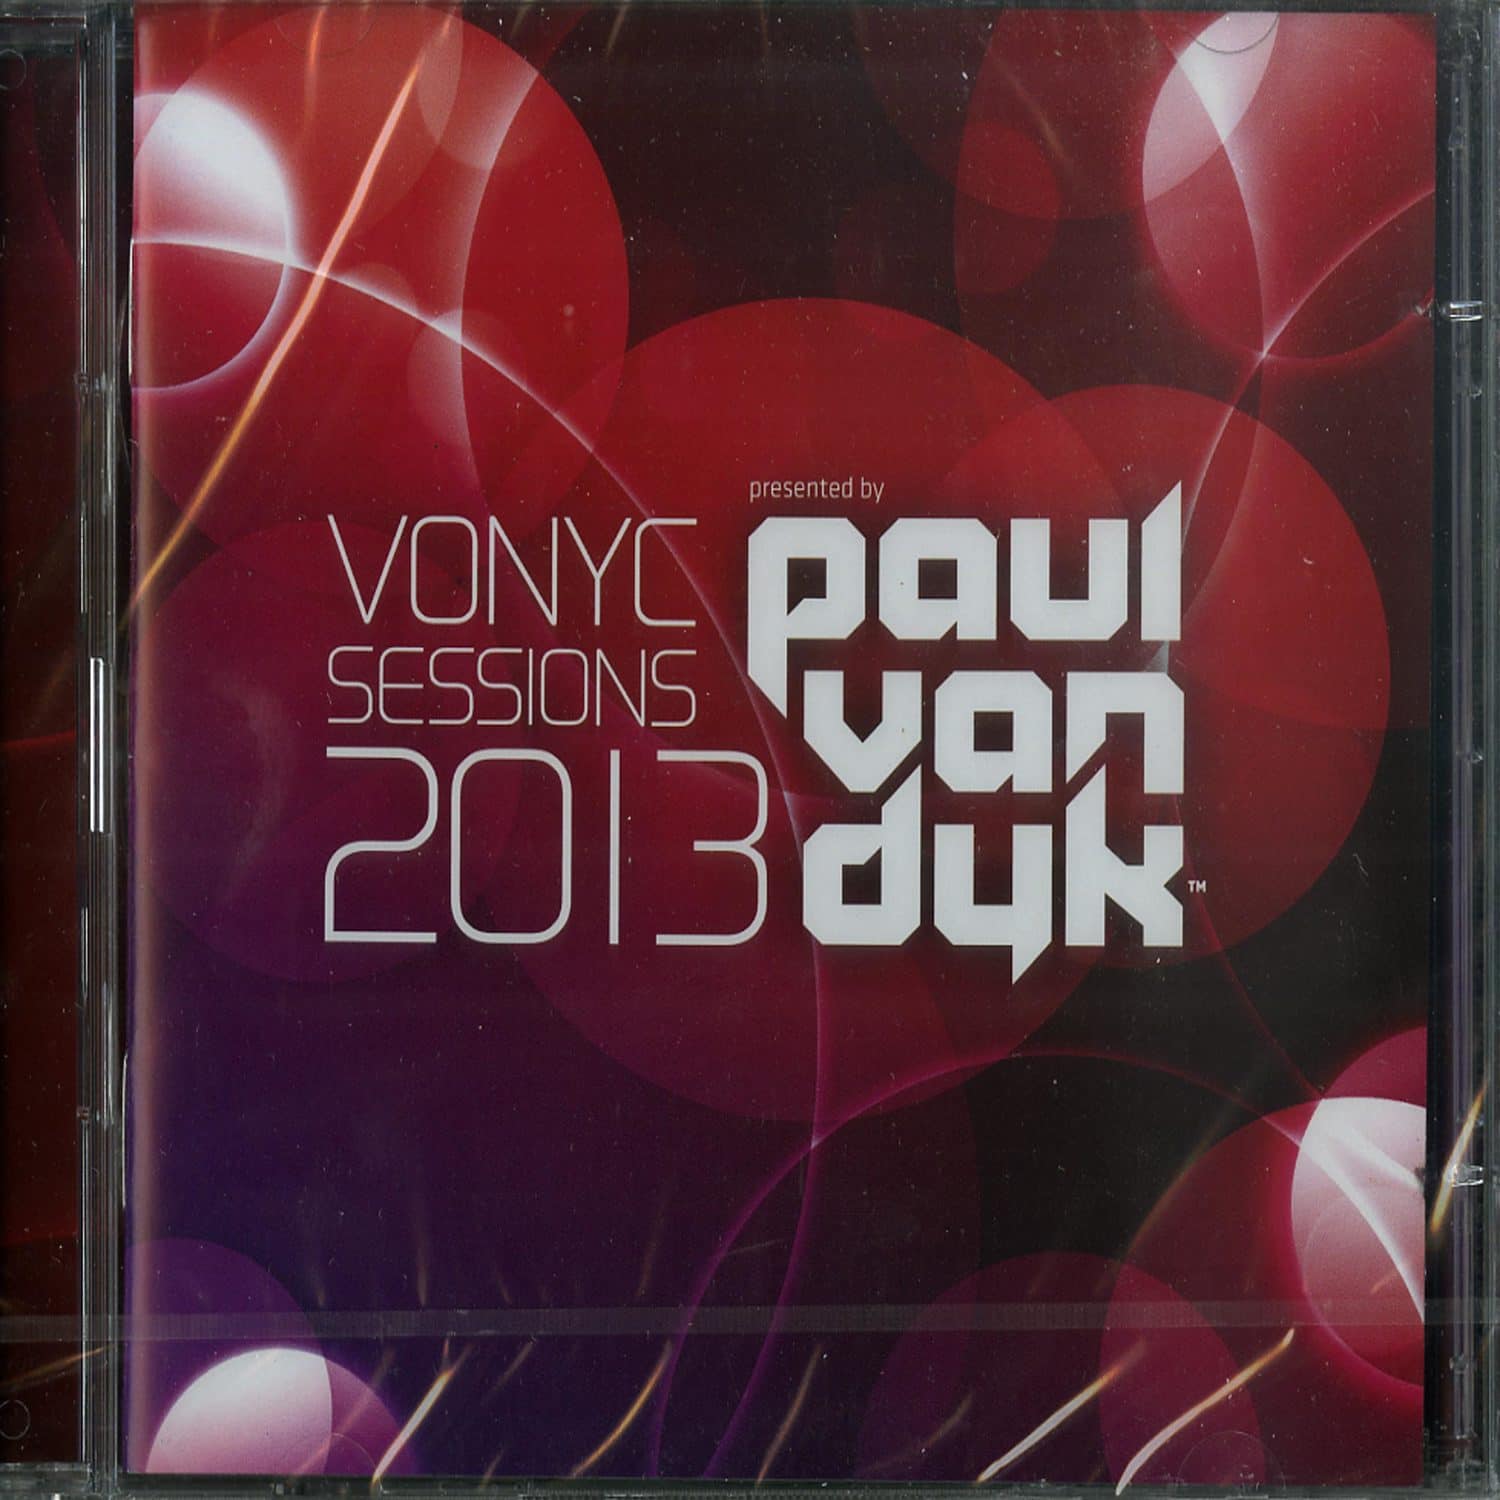 Paul van Dyk - VONYC SESSIONS 2013 